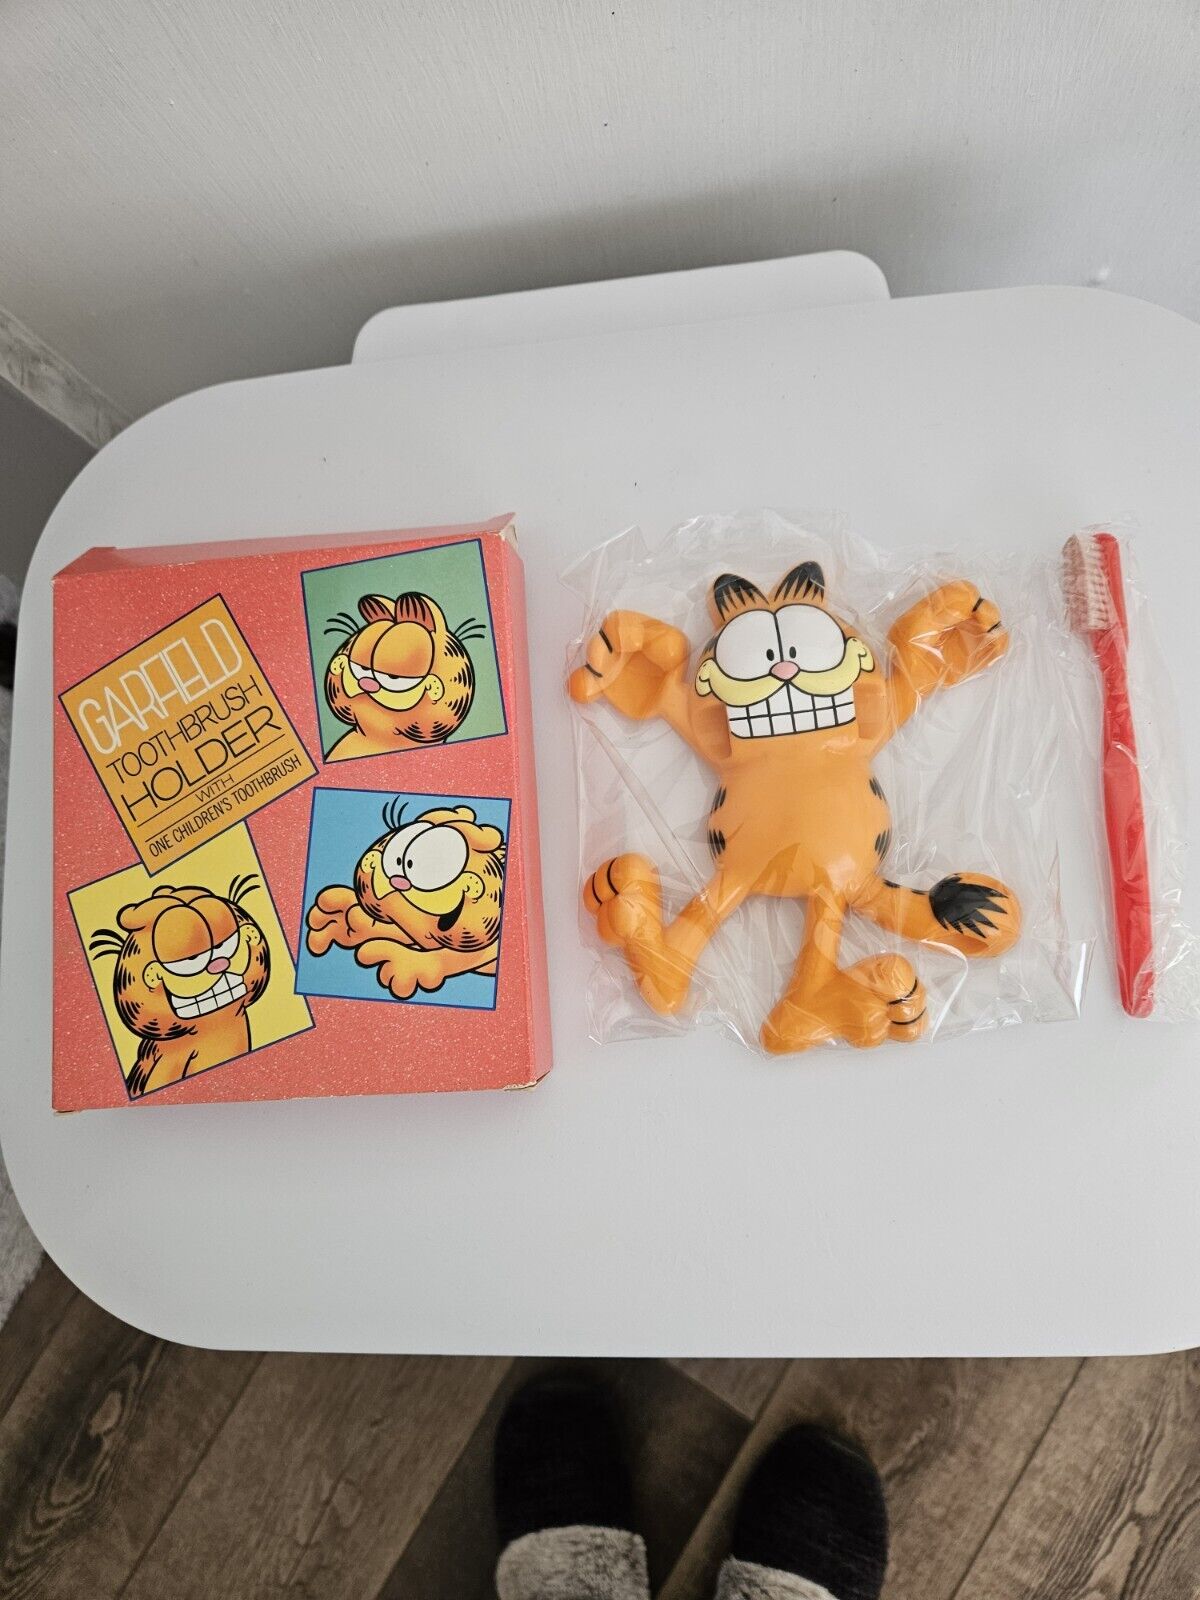 1978 Garfield Toothbrush Holder and Toothbrush New in Box